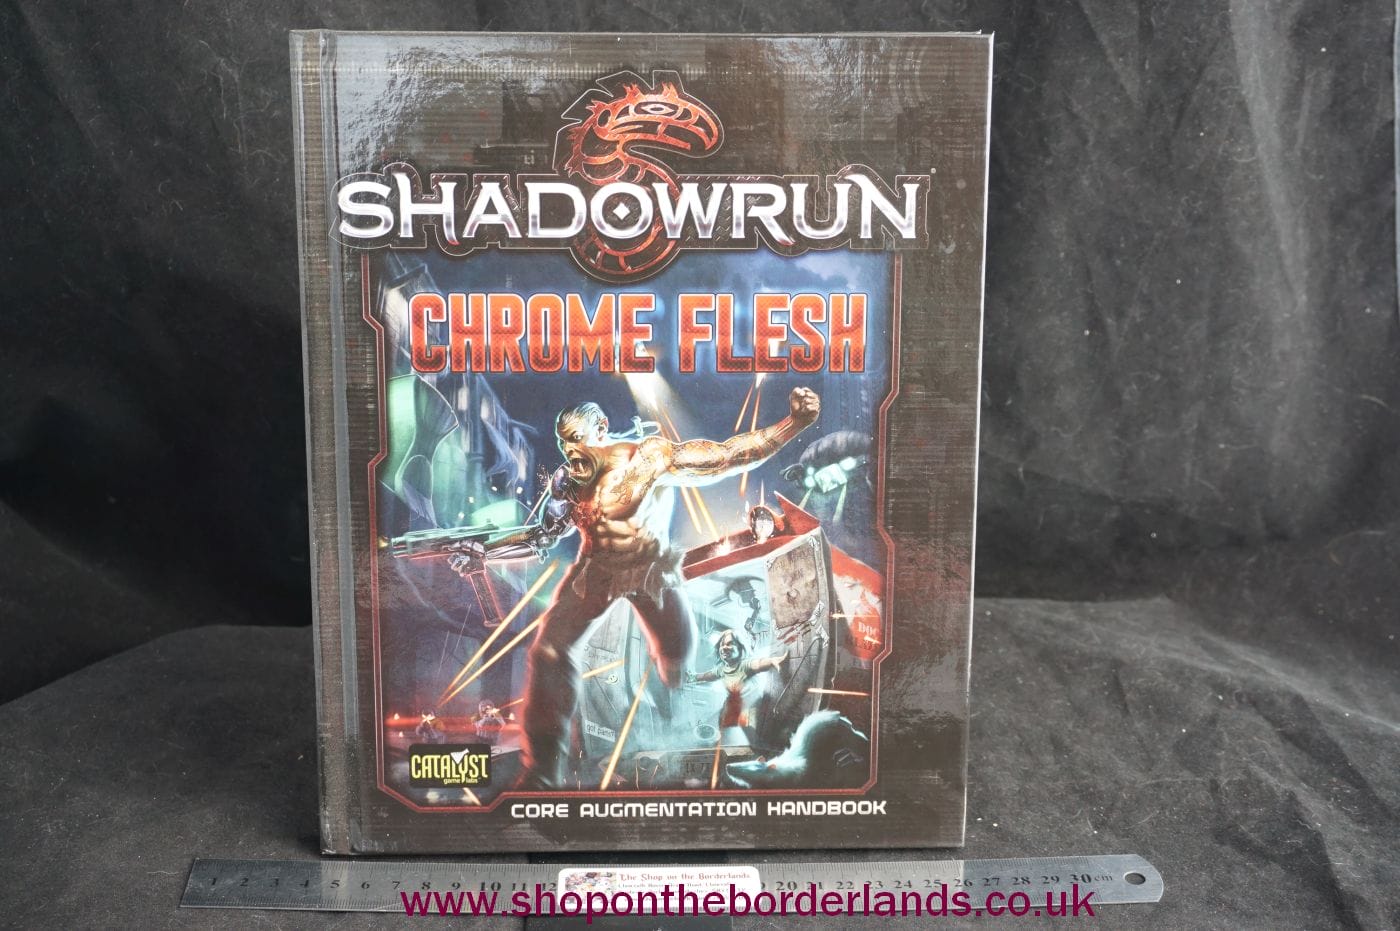 Shadowrun 6 - Battle Royale - Pegasus Press